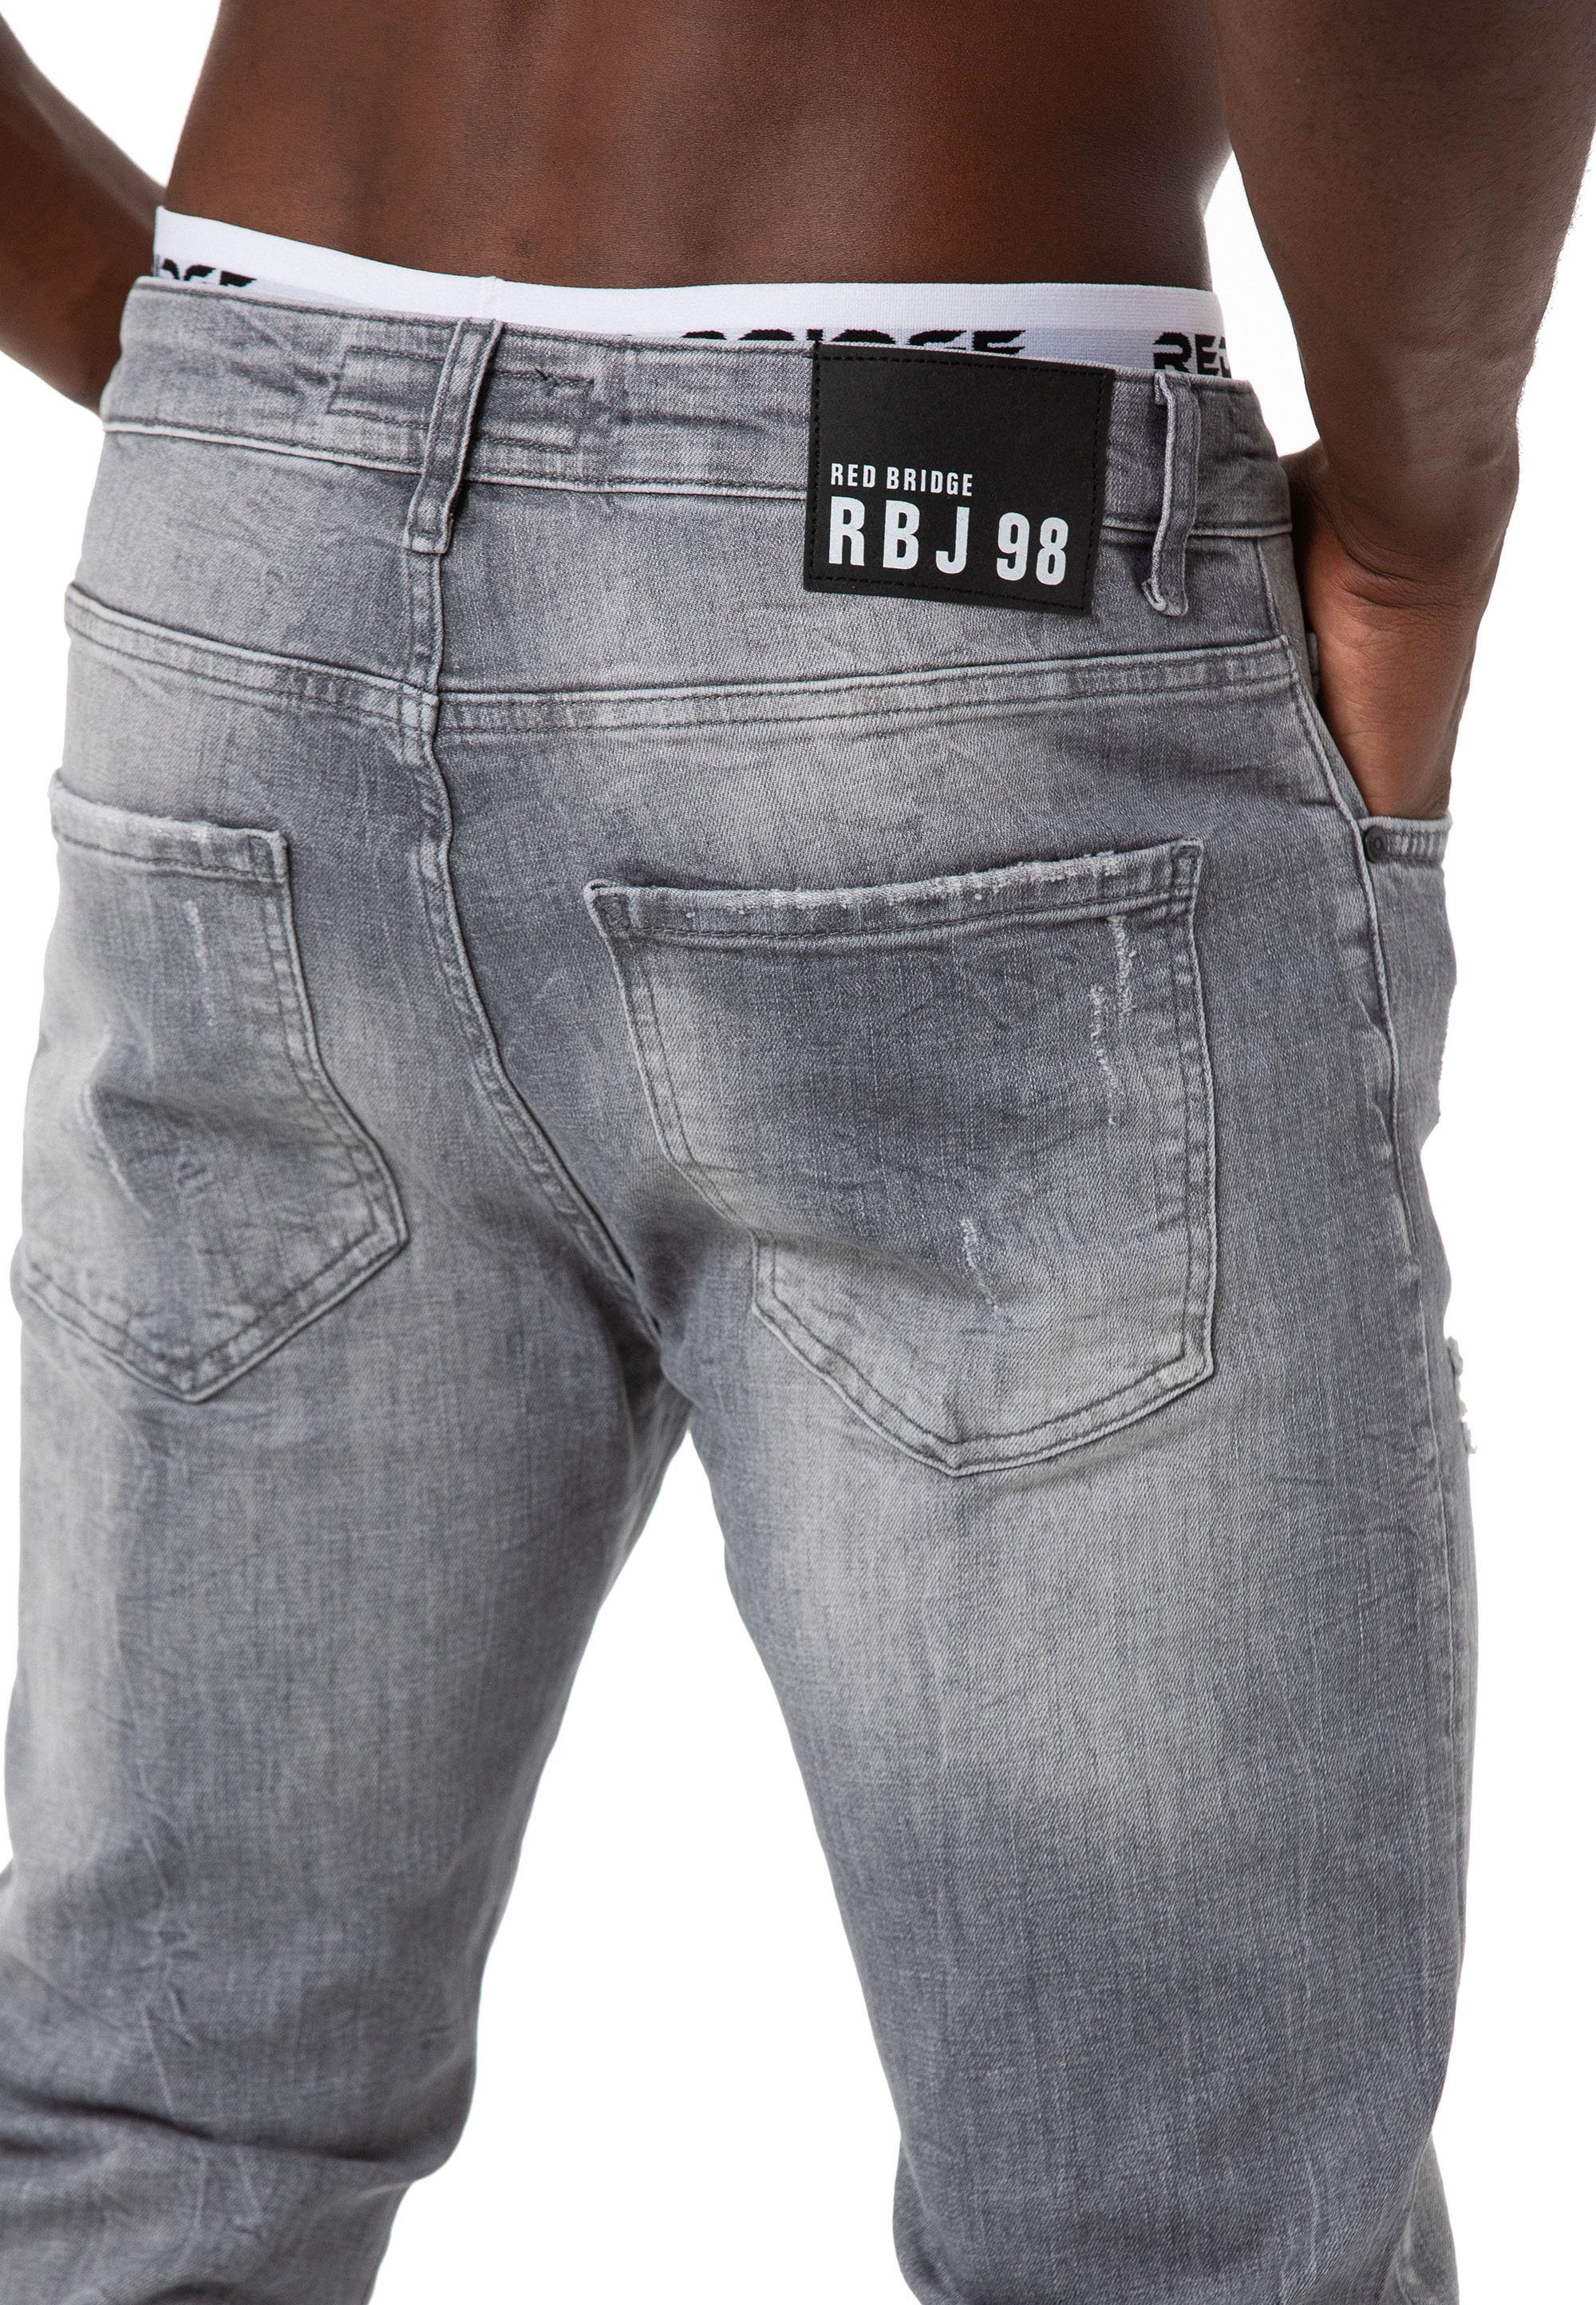 Pants Straight Distressed-Look Denim Hose Slim-fit-Jeans Grau Leg RedBridge